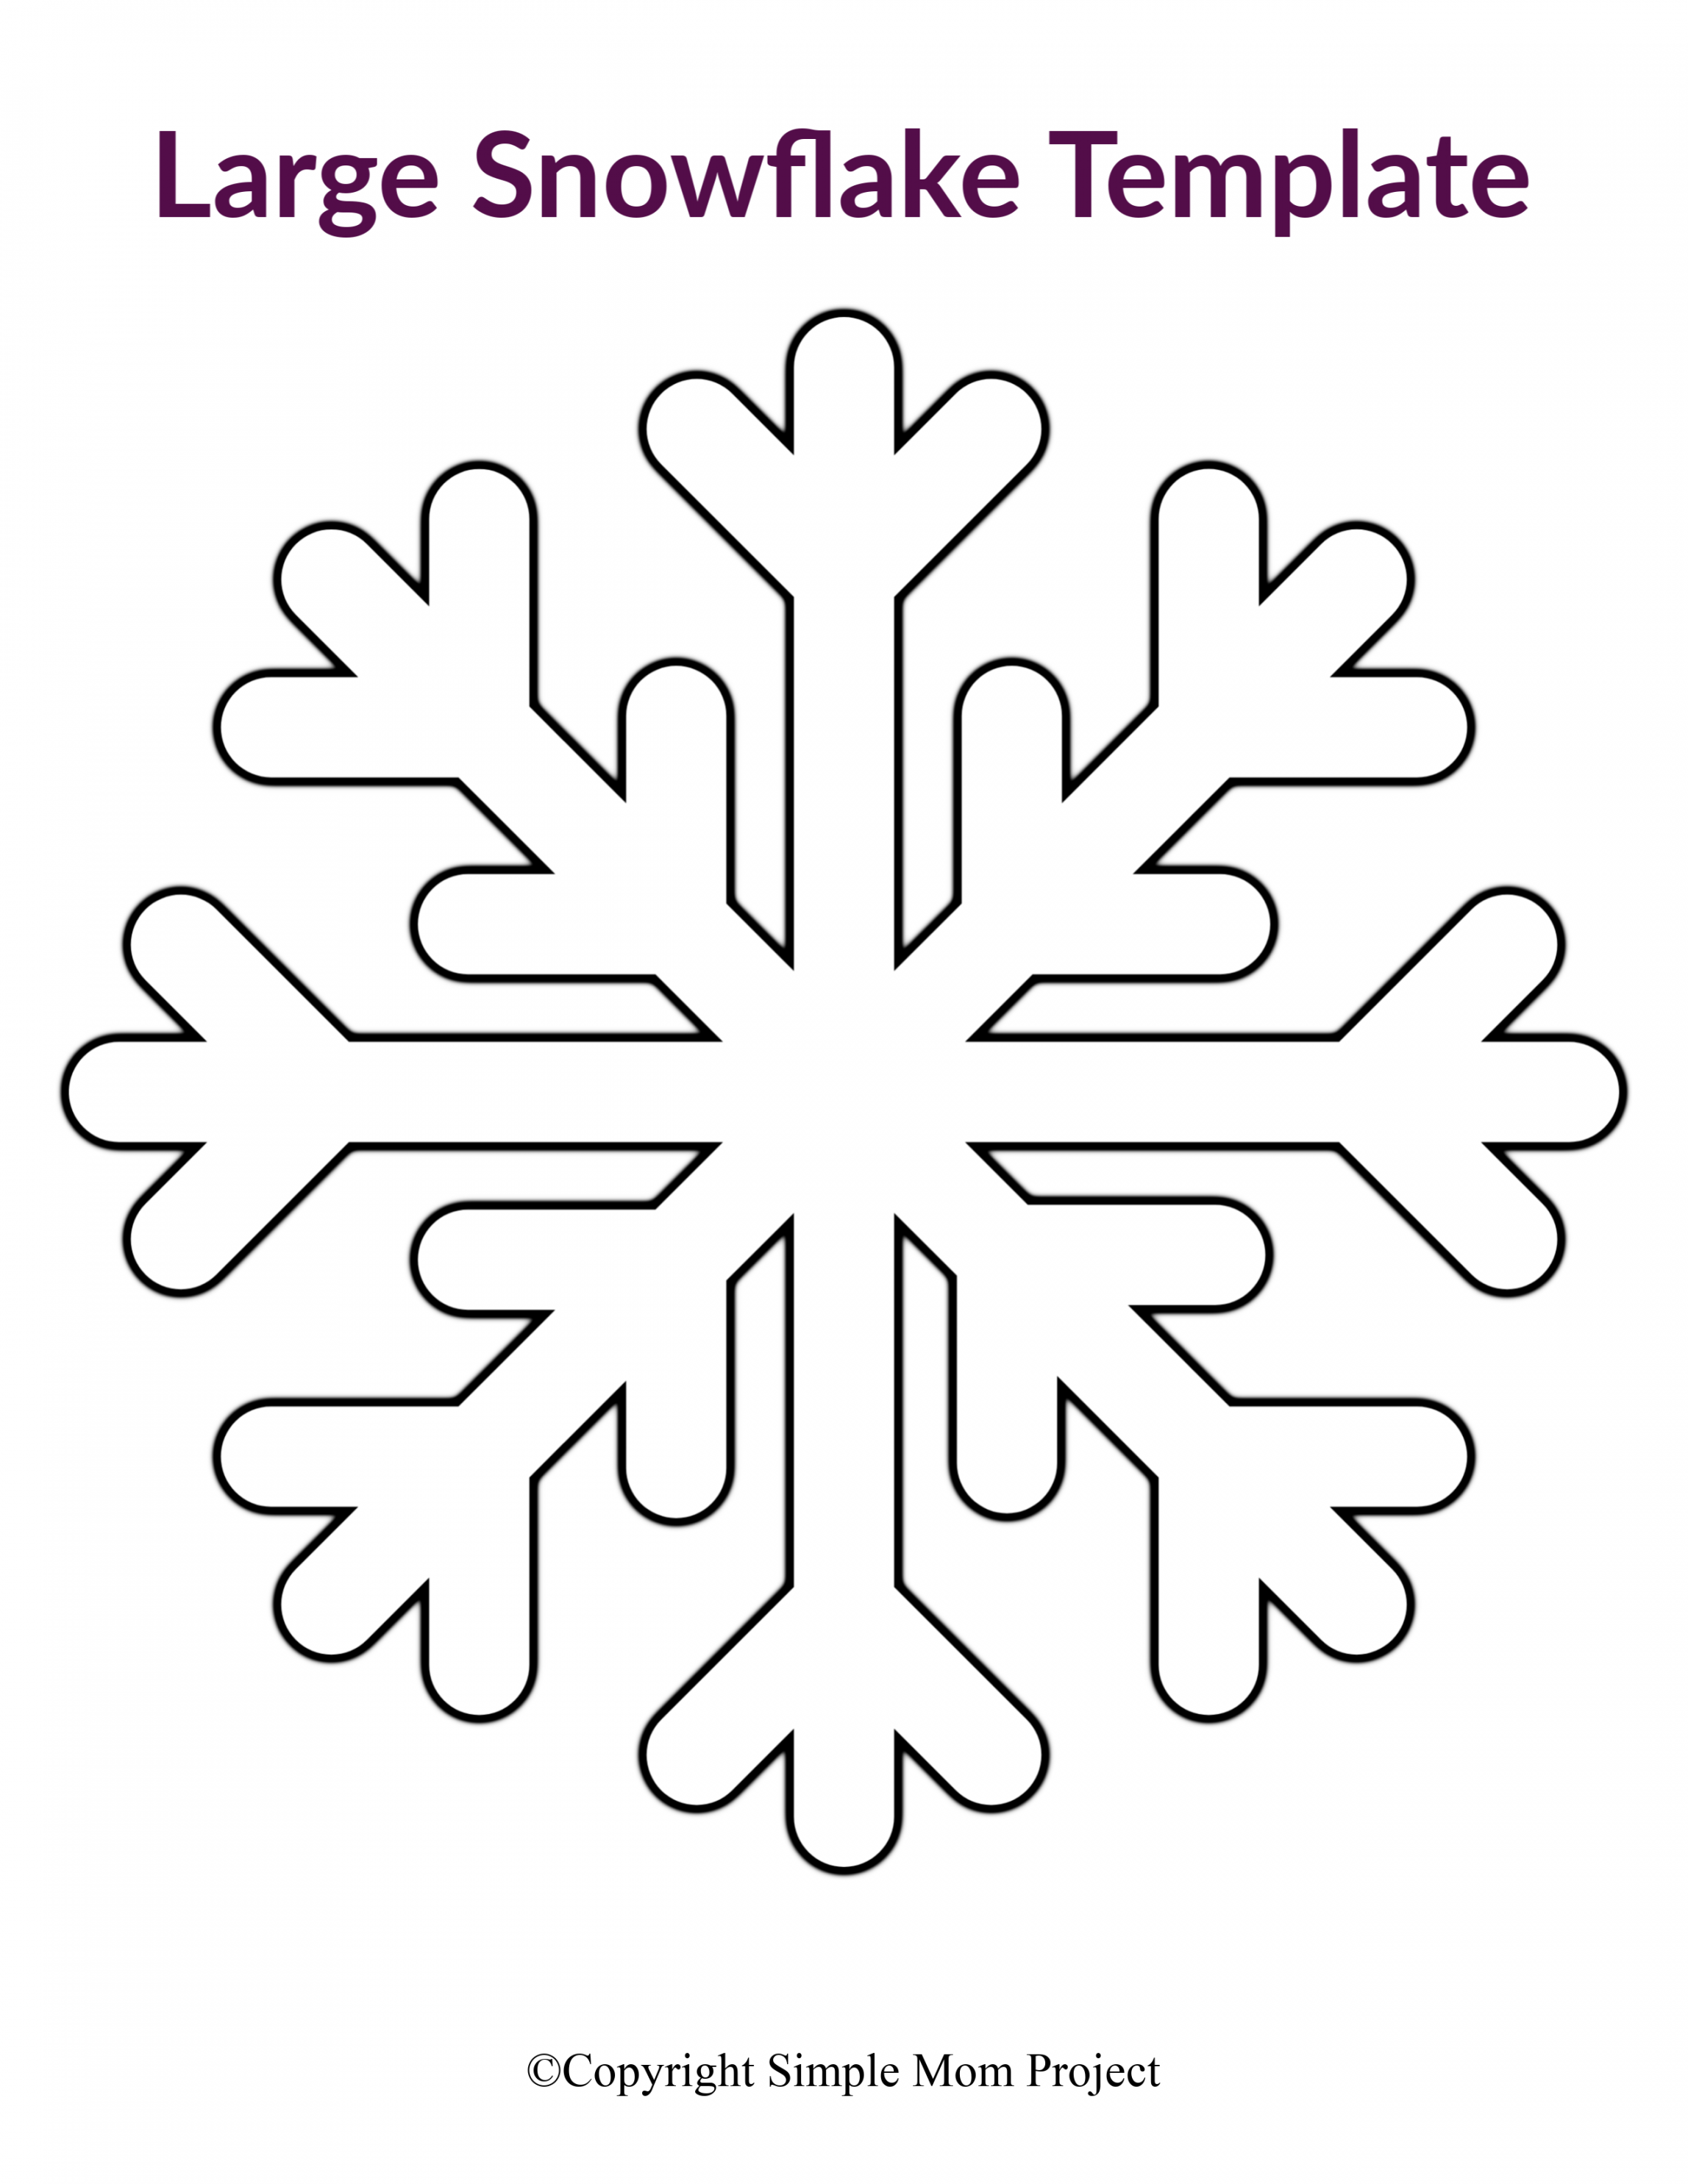 Free Printable Large Snowflake Templates - Simple Mom Project - FREE Printables - Snowflake Template Free